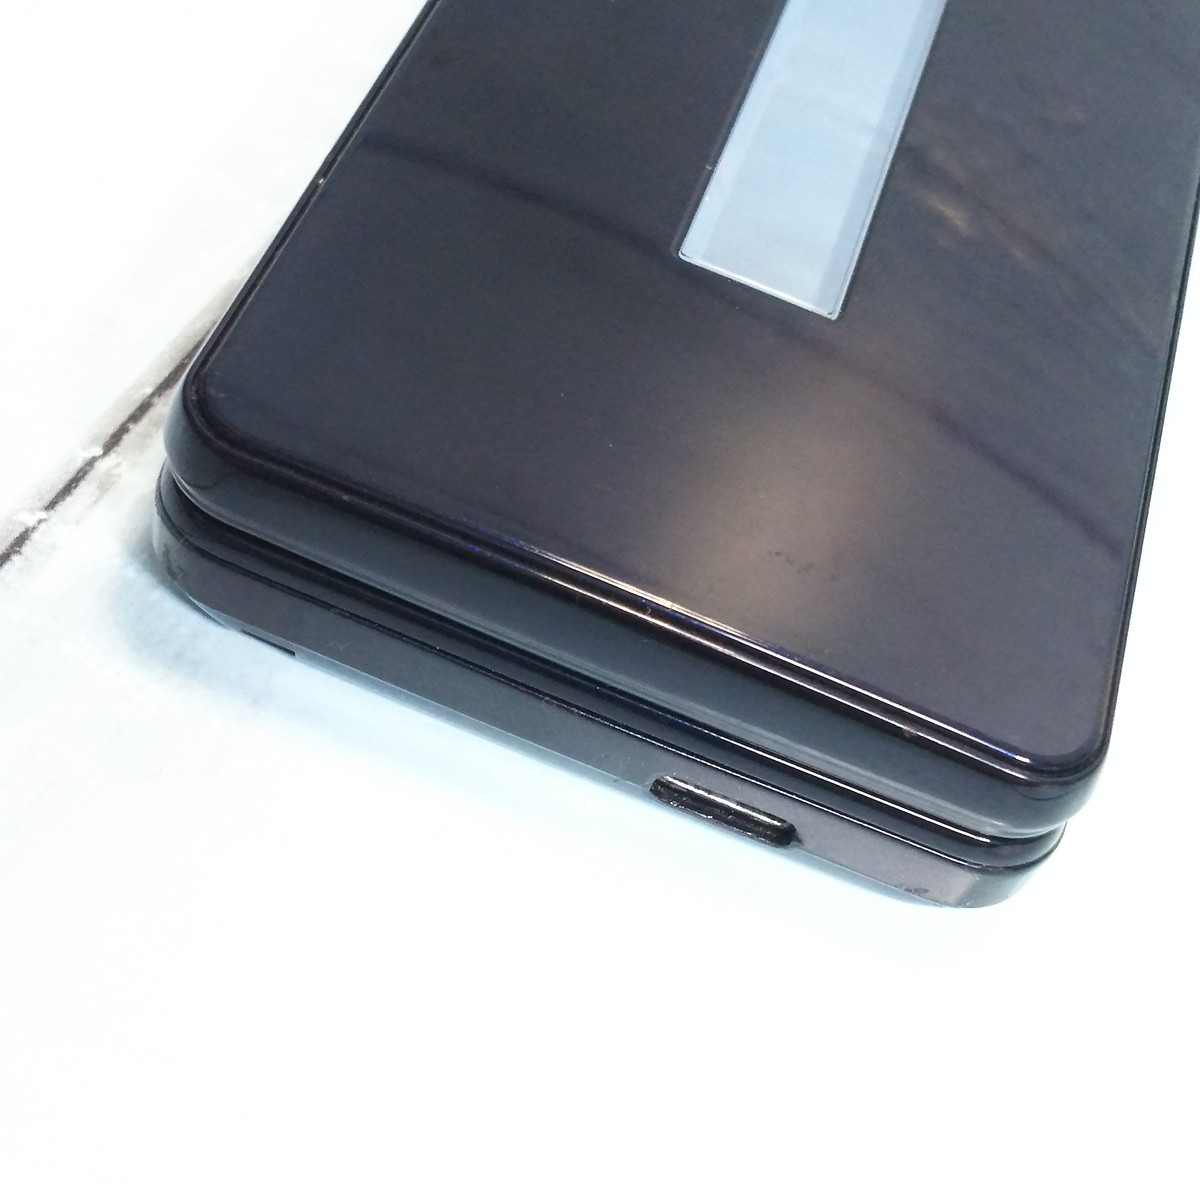 docomo SH-02L AQUOS SHARP cellular phone black body White ROM SIM lock released .SIM free 625826